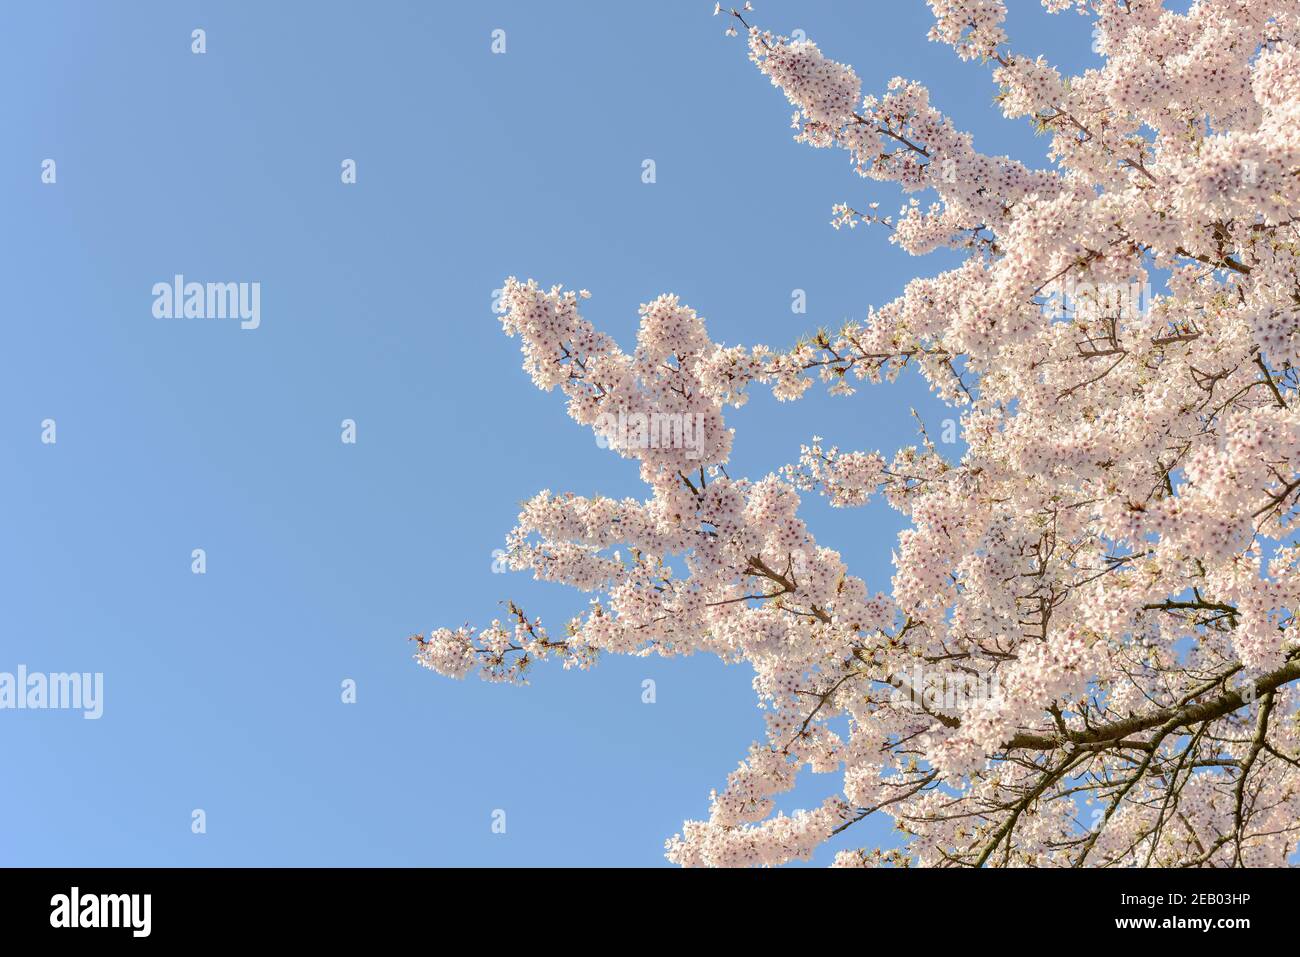 Cherry blossom against clear blue sky Stock Photo